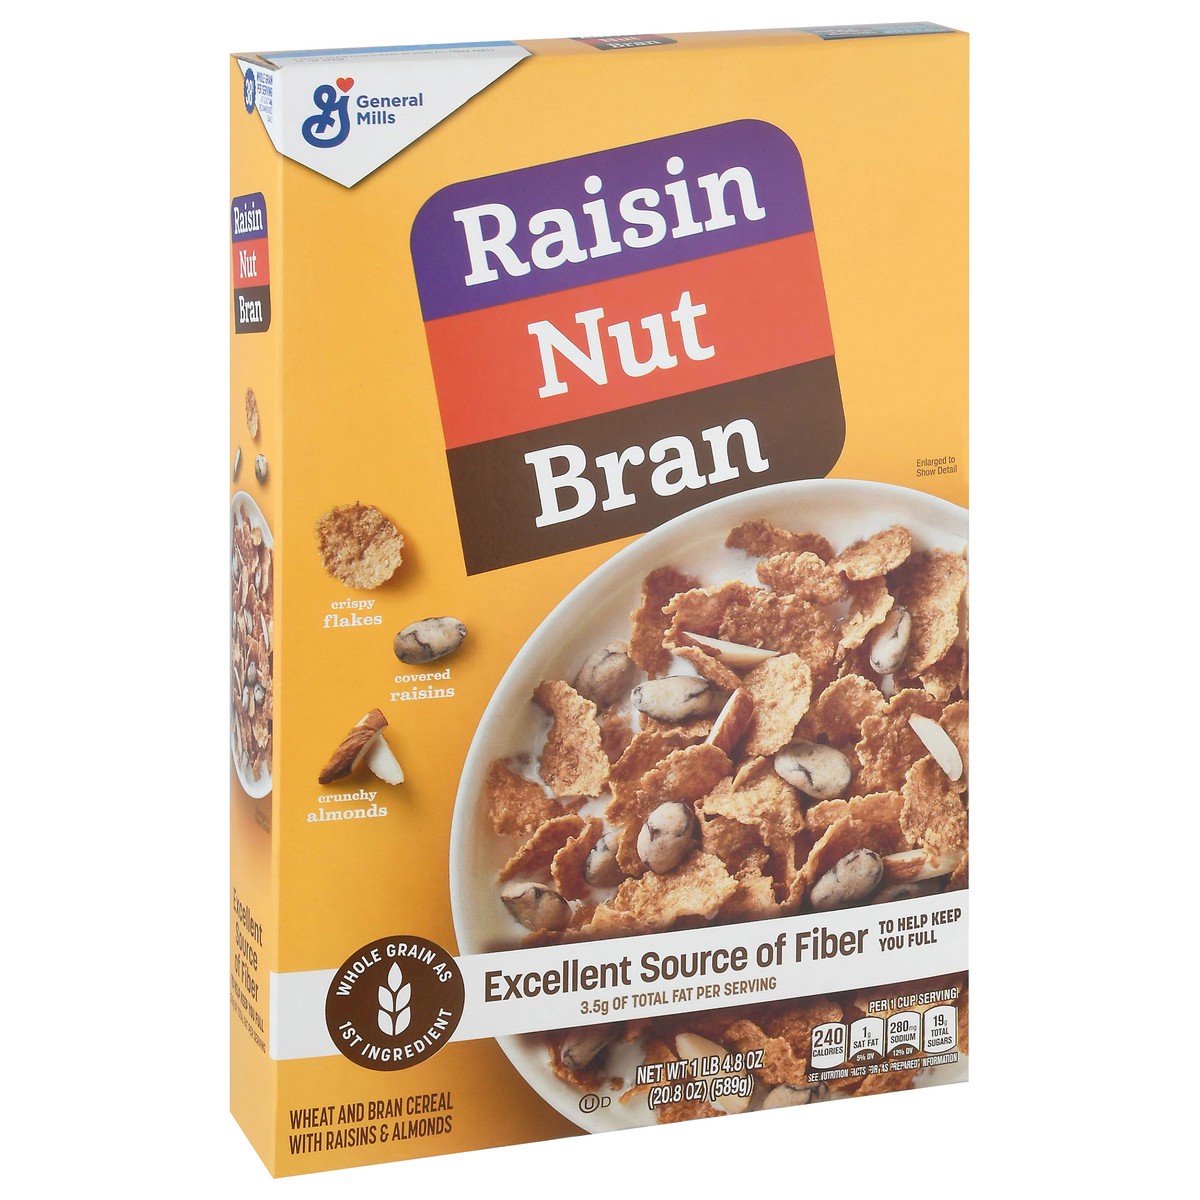 slide 2 of 11, 	
Raisin Nut Bran Breakfast Cereal, Coated Raisins, Almonds, Excellent Source Fiber, 20.8 oz, 17.1 oz